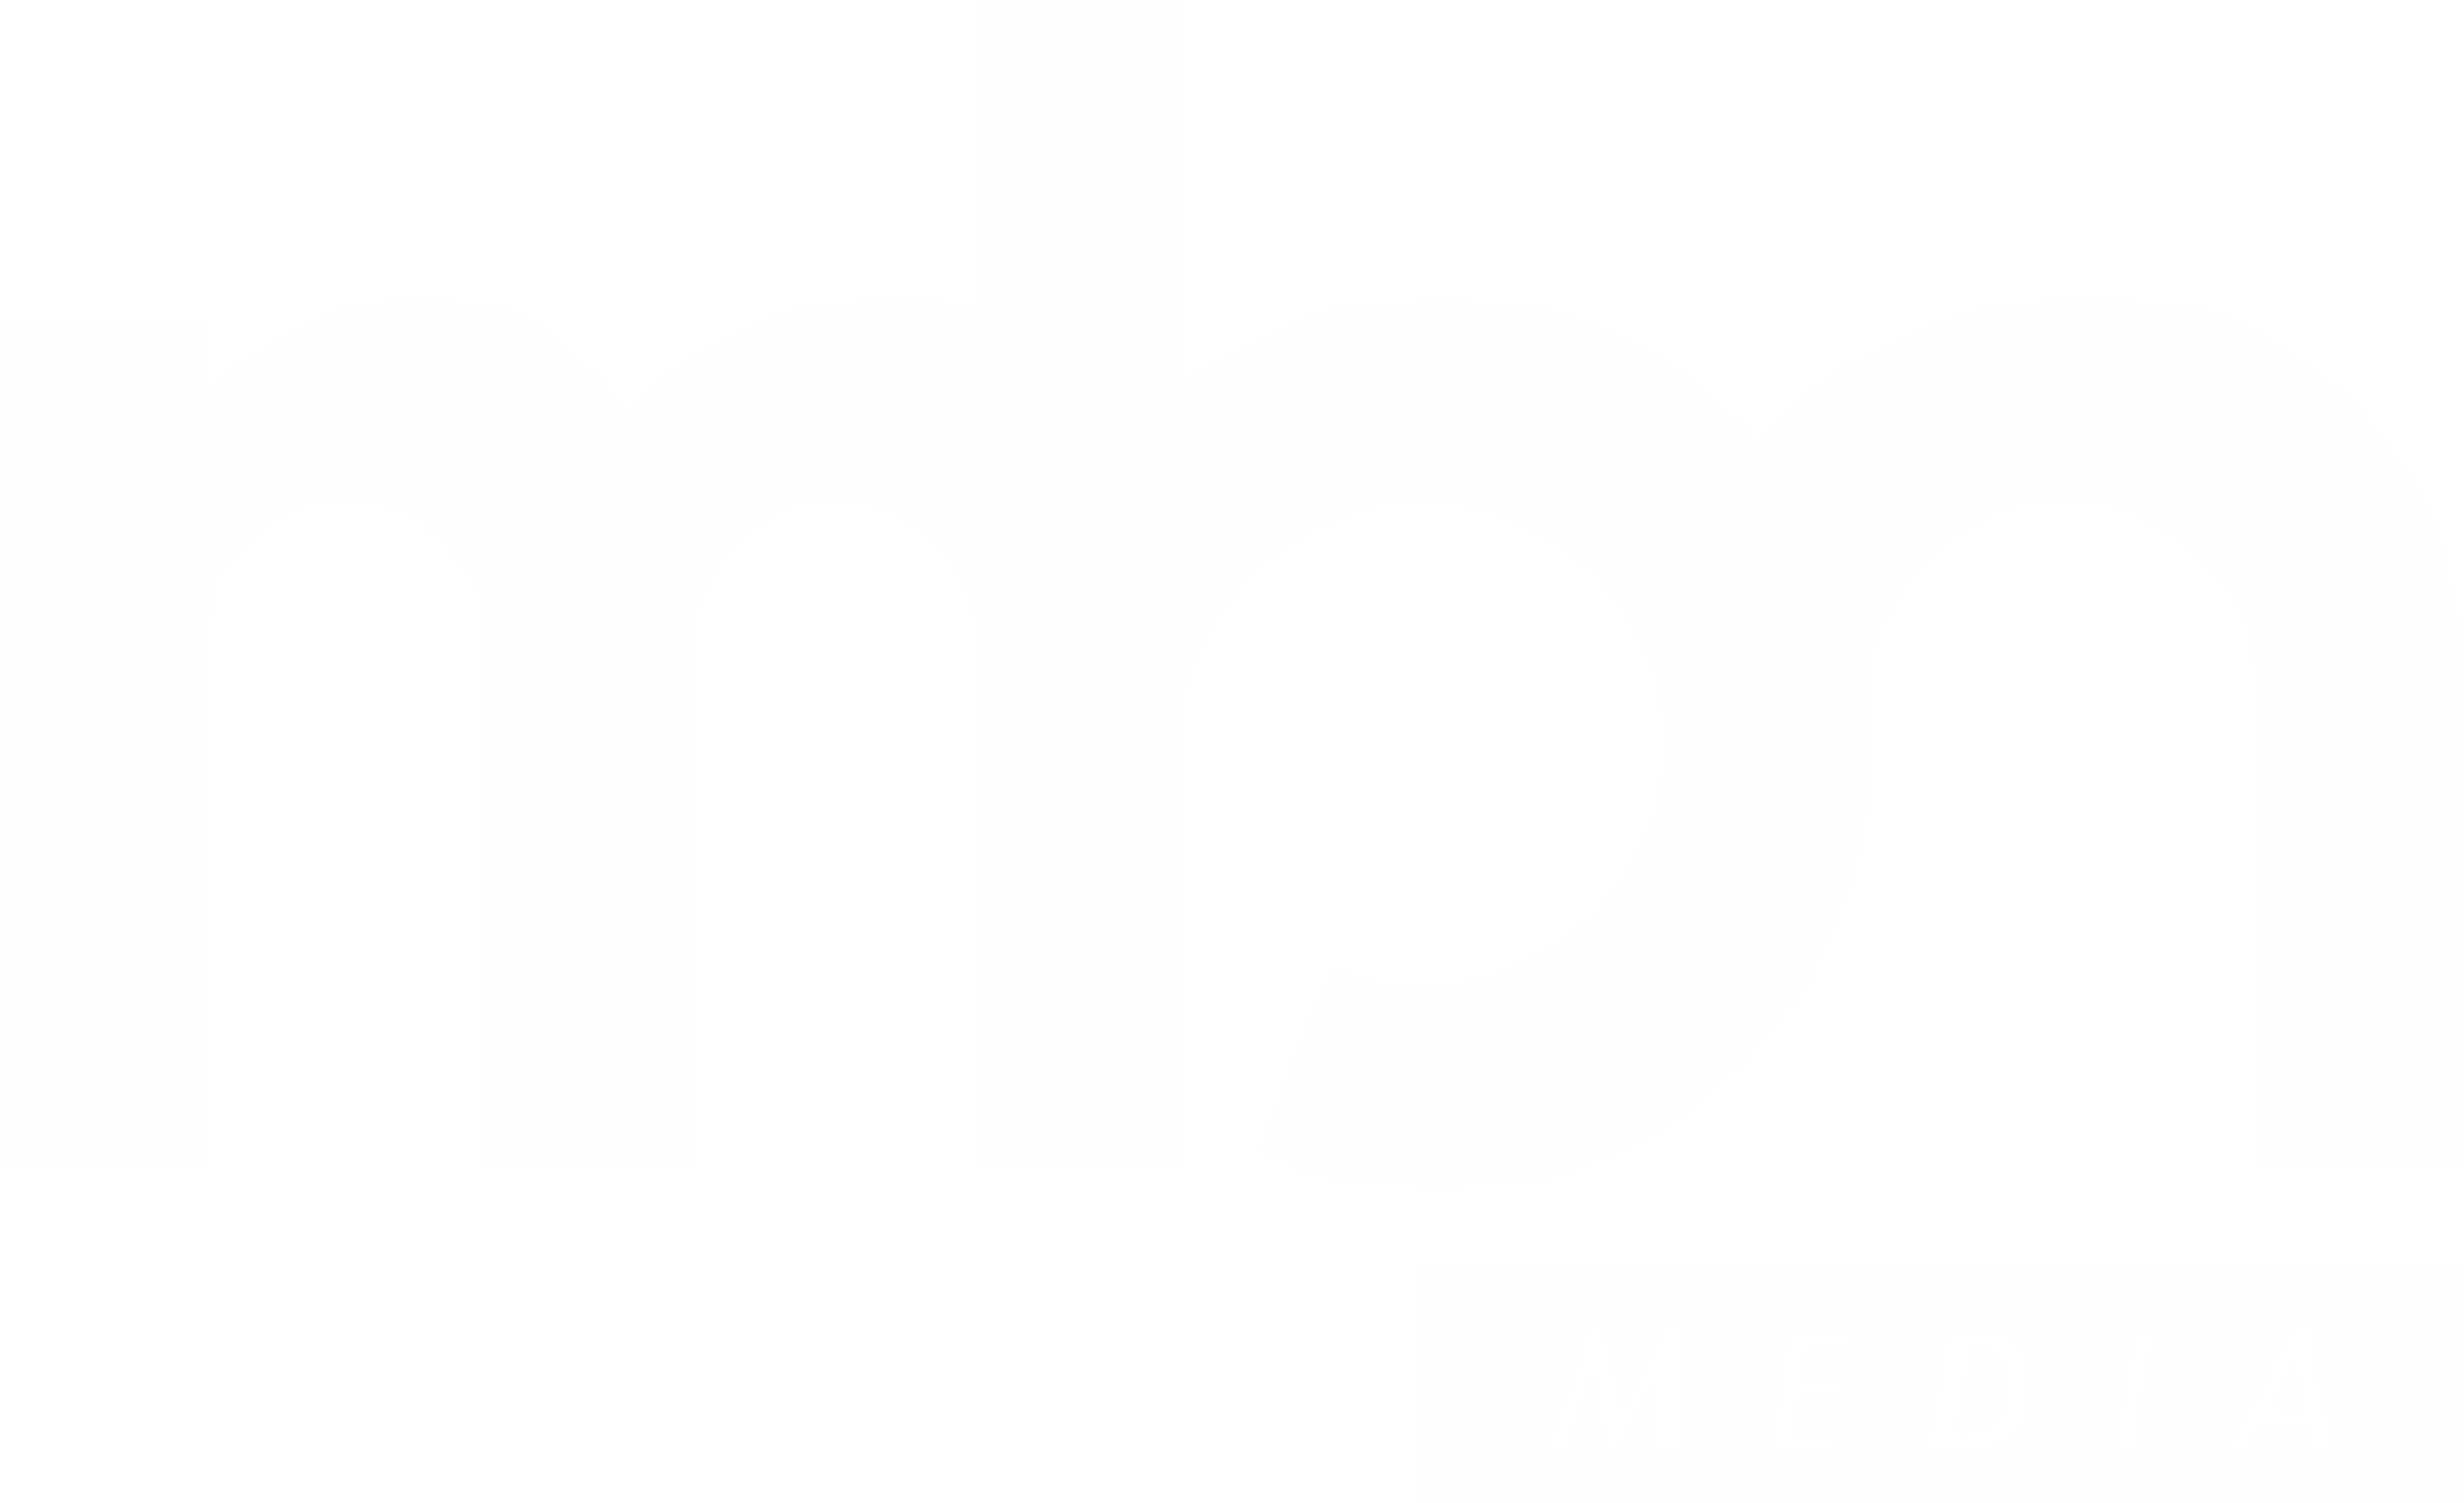 MBN Media